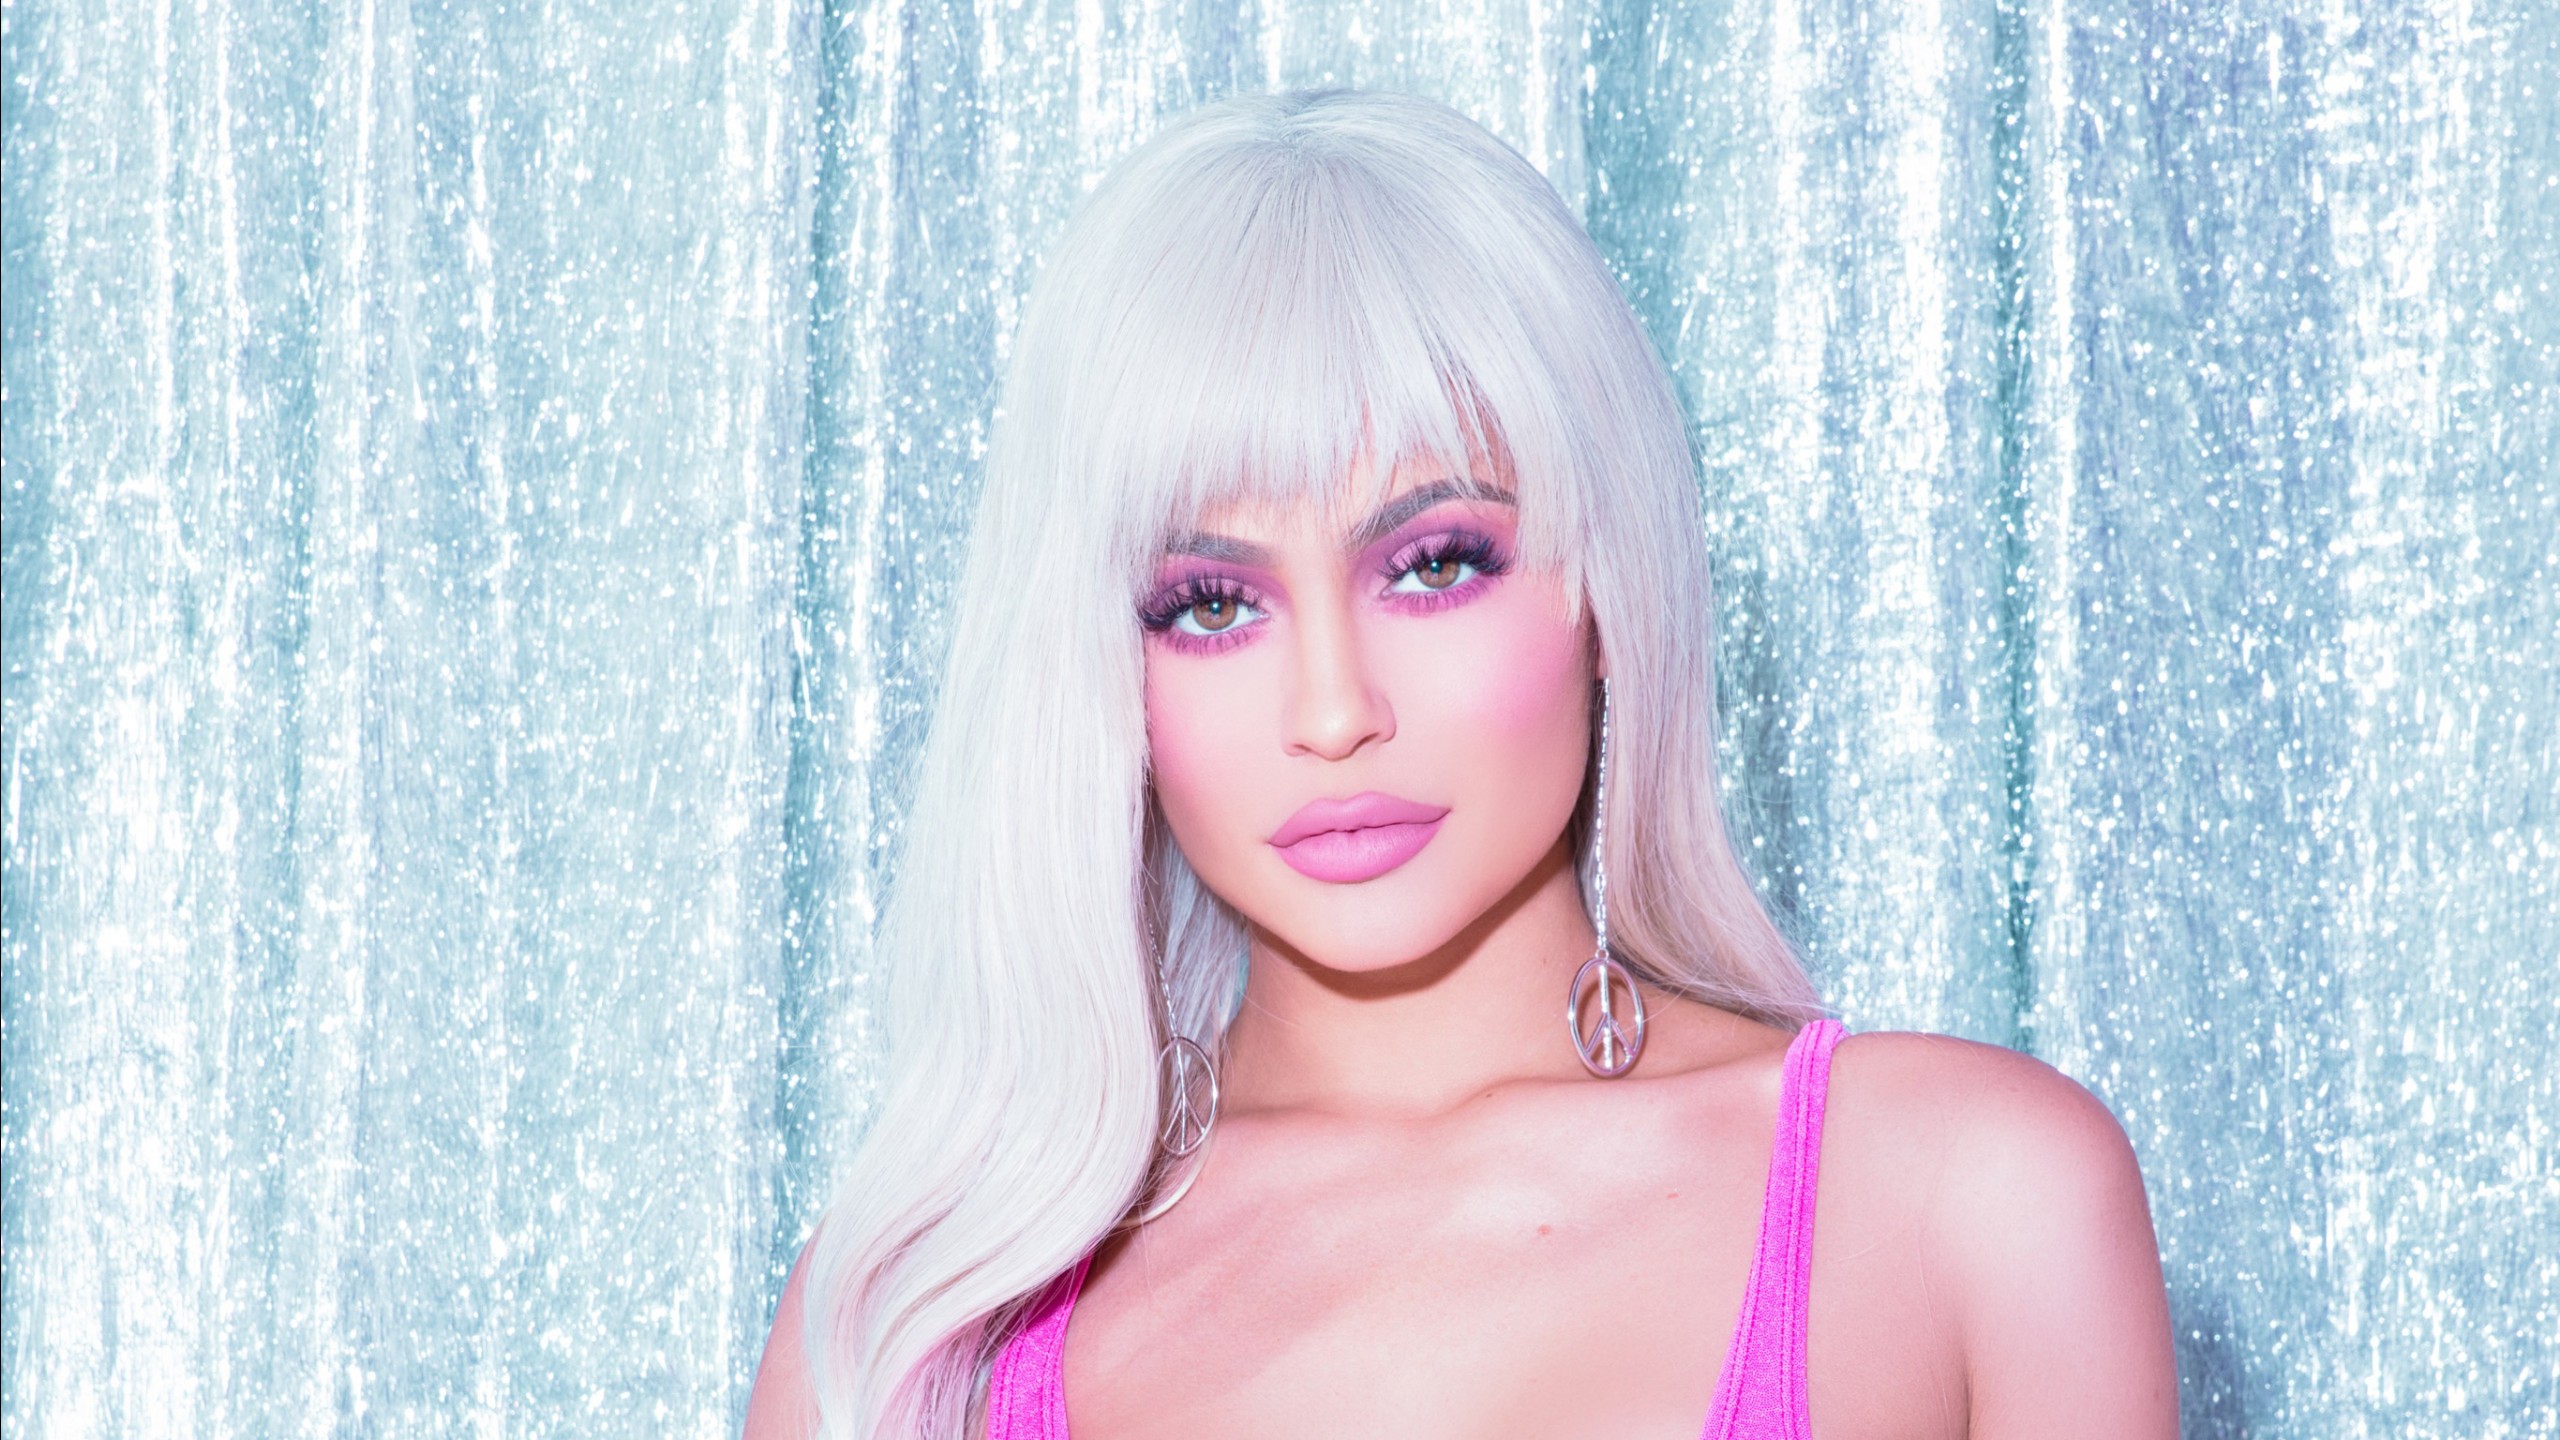 Hazel Eyes Kylie Jenner Lipstick Model White Hair Woman 2560x1440